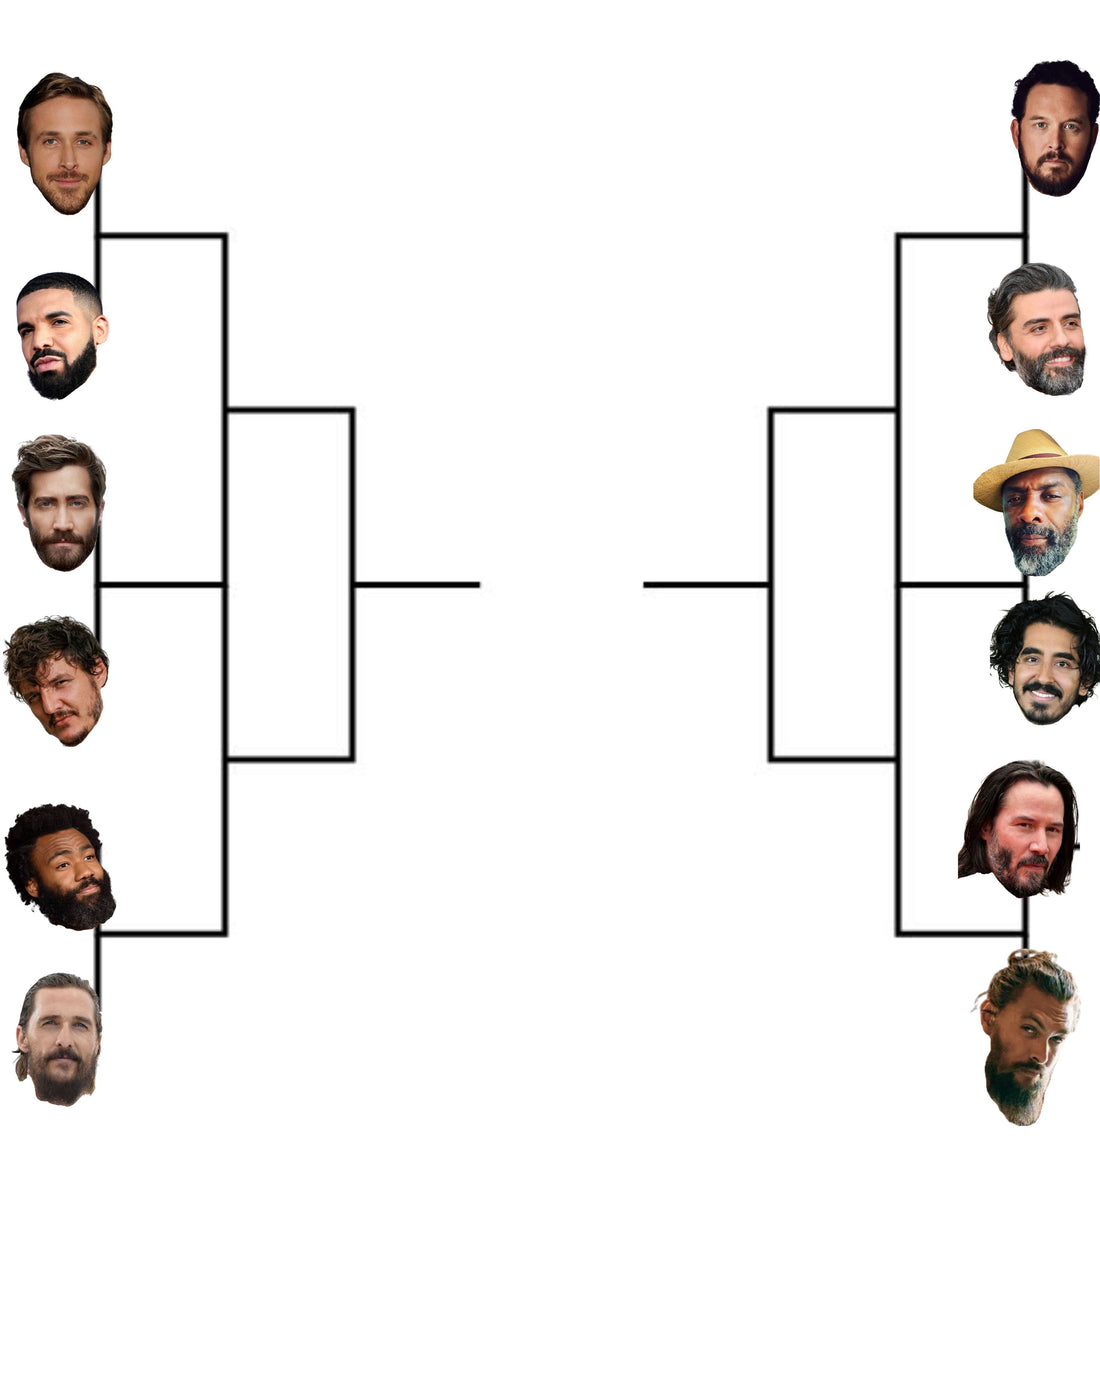 The Epic Showdown: Who Wears the Crown in the Celebrity Beard Battle?